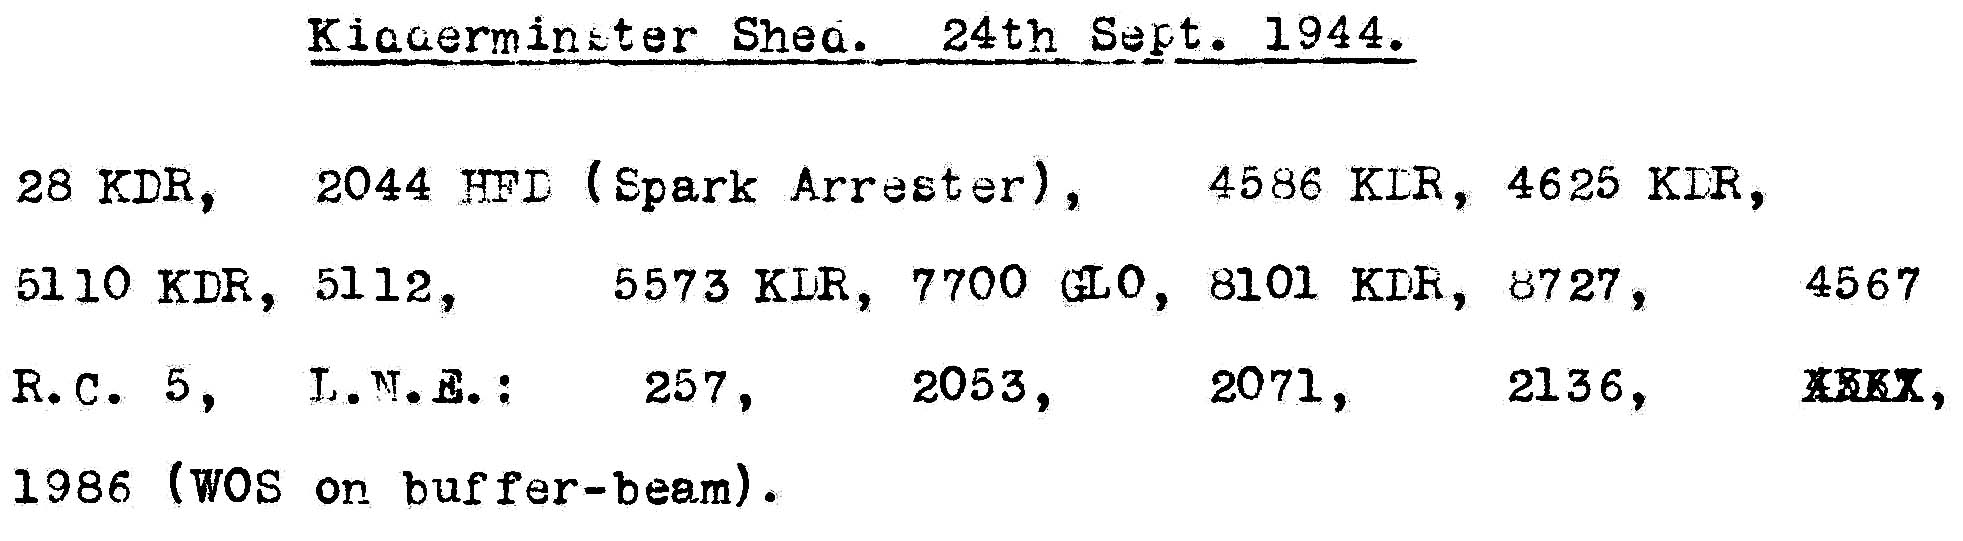 24th September 1944 - Kidderminster Shed.